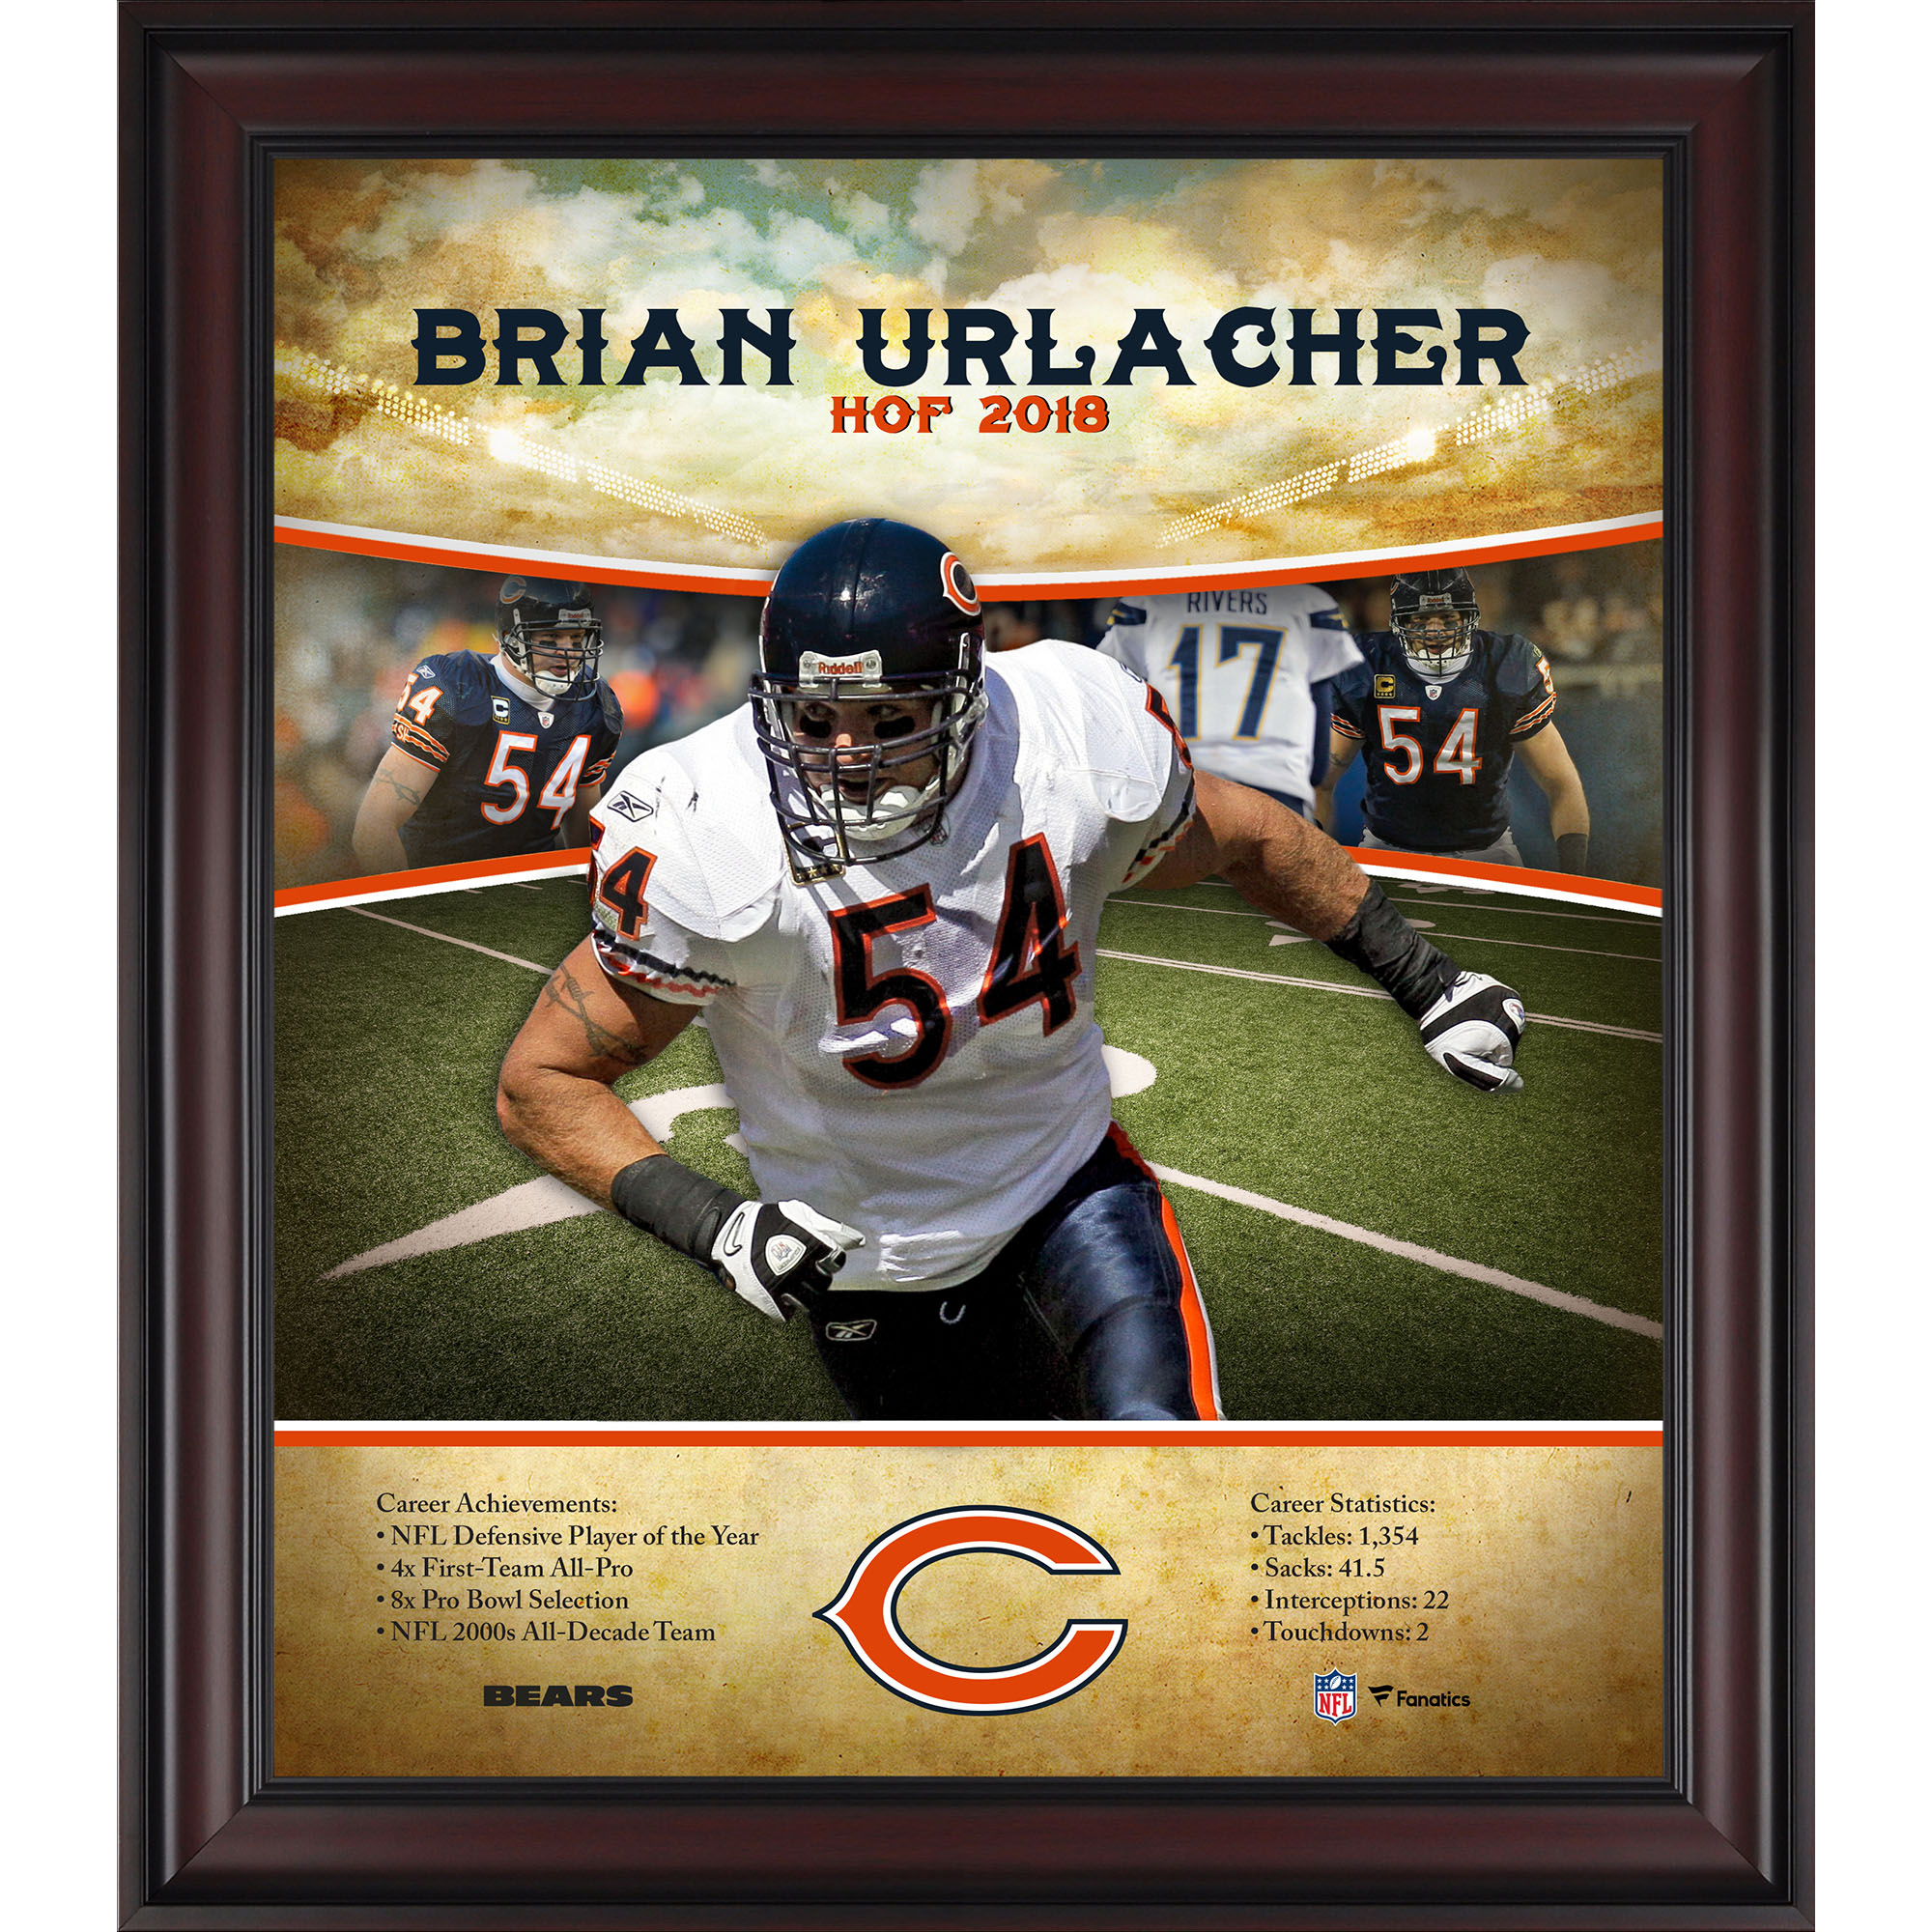 Brian Urlacher Chicago Bears Hall of Fame Karriereprofil, gerahmt, 15 x 17 Zoll